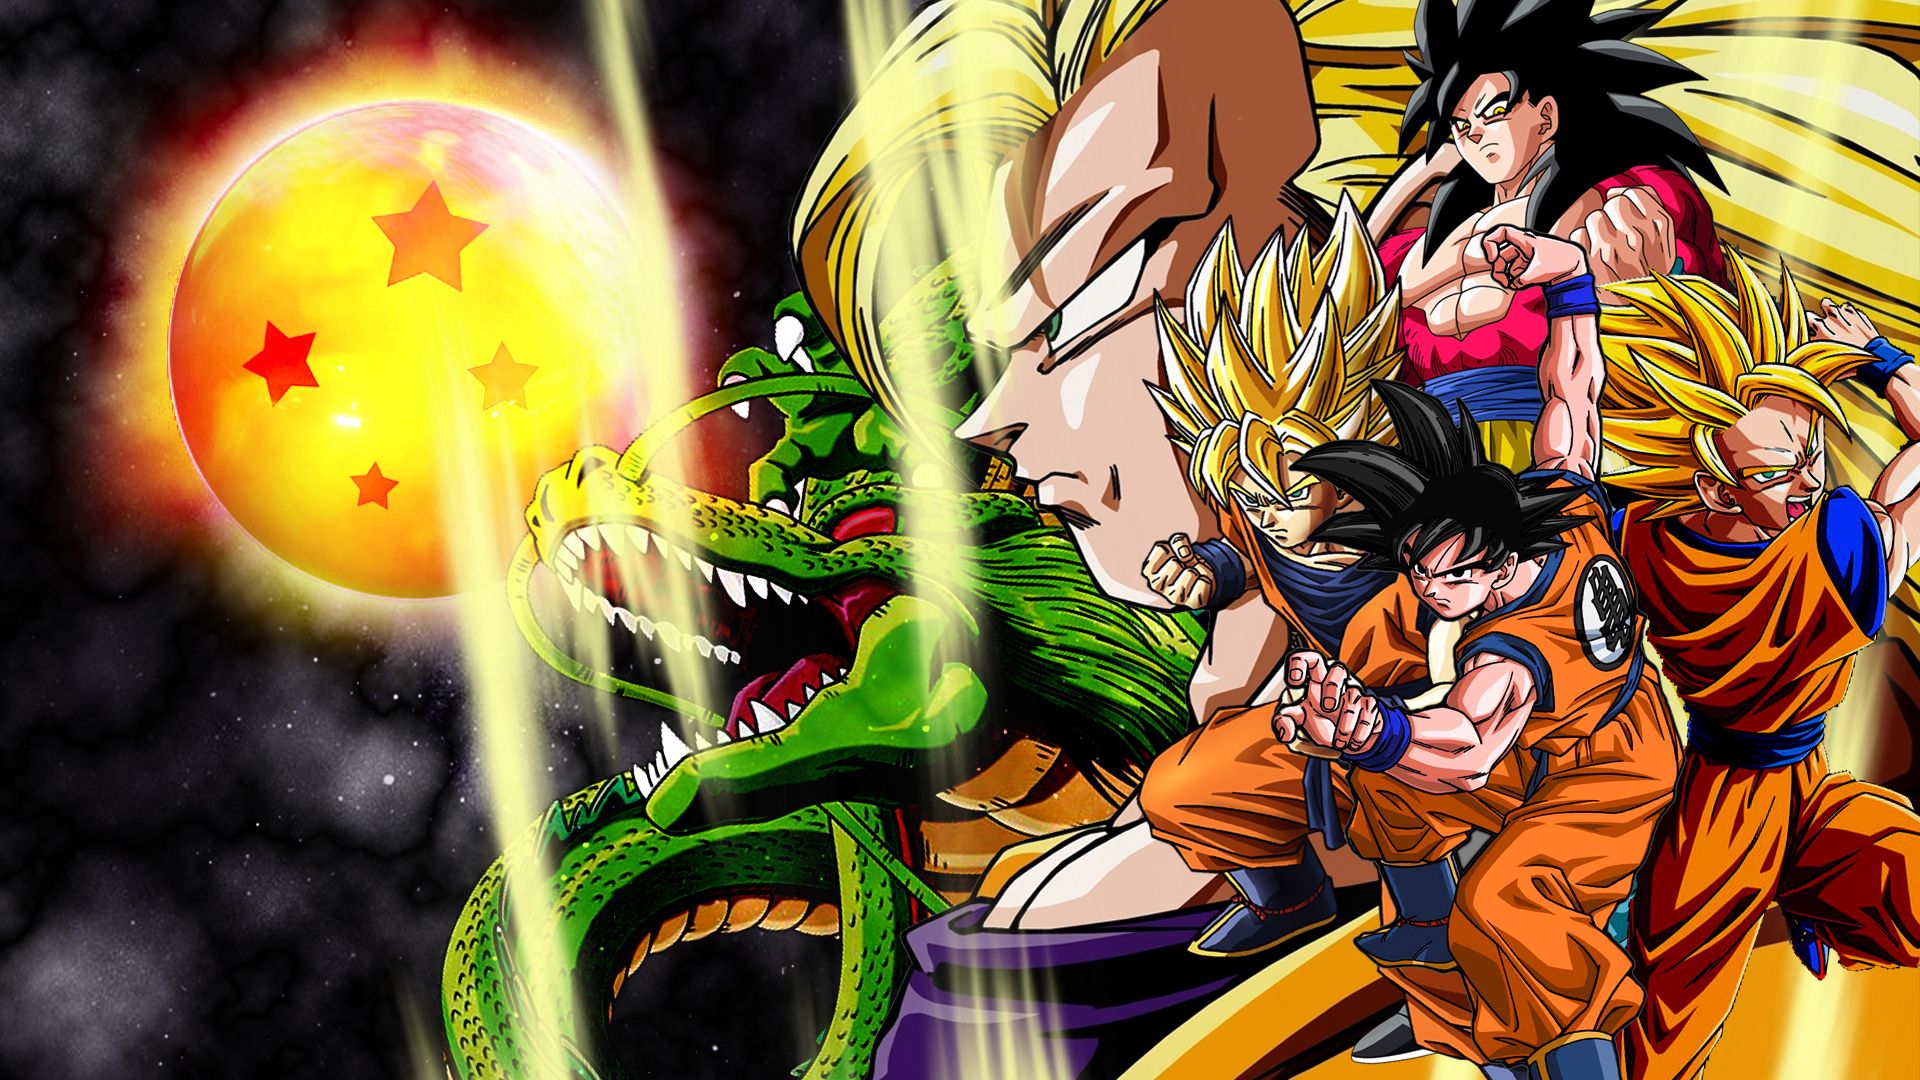 Goku Super Saiyan 4 - wallpaper.